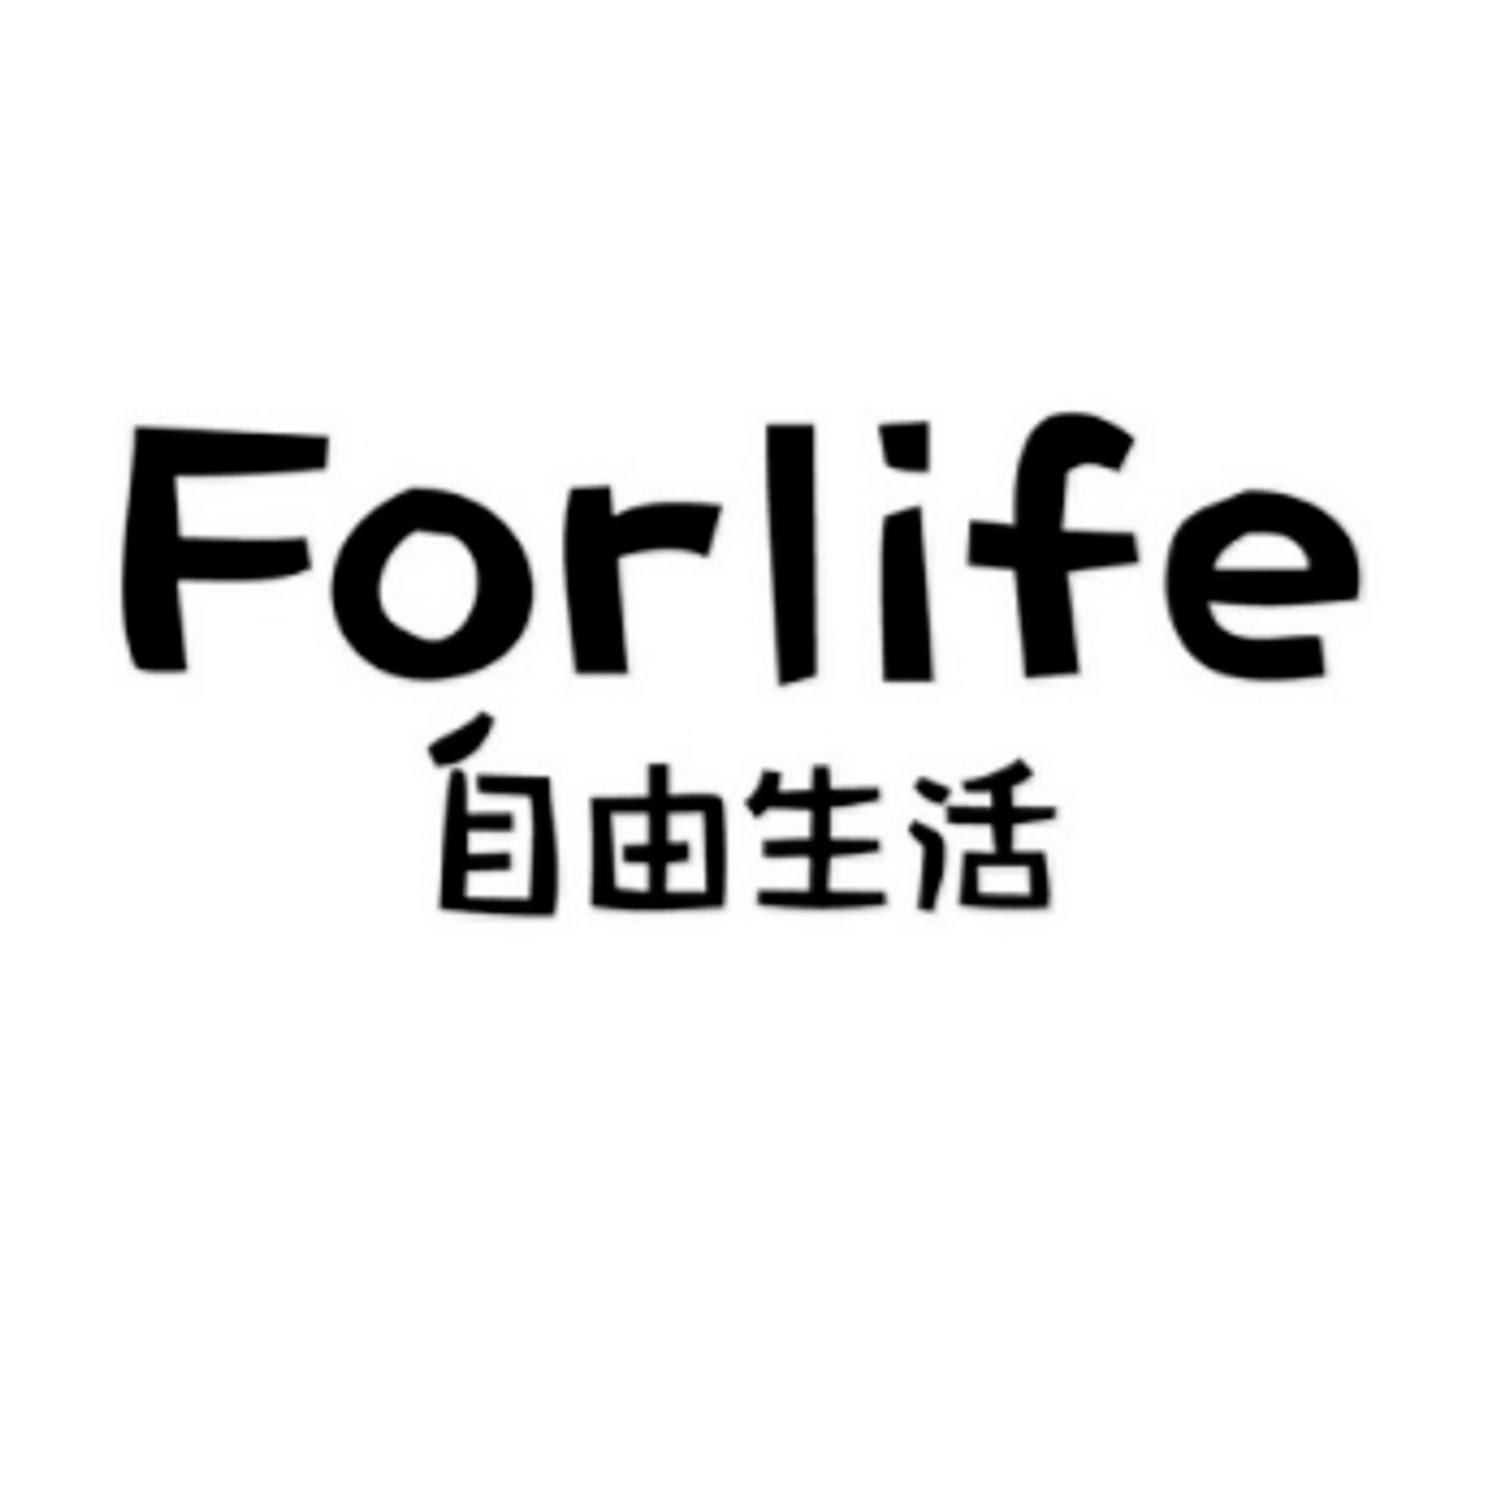 自由生活 forlife 商标公告